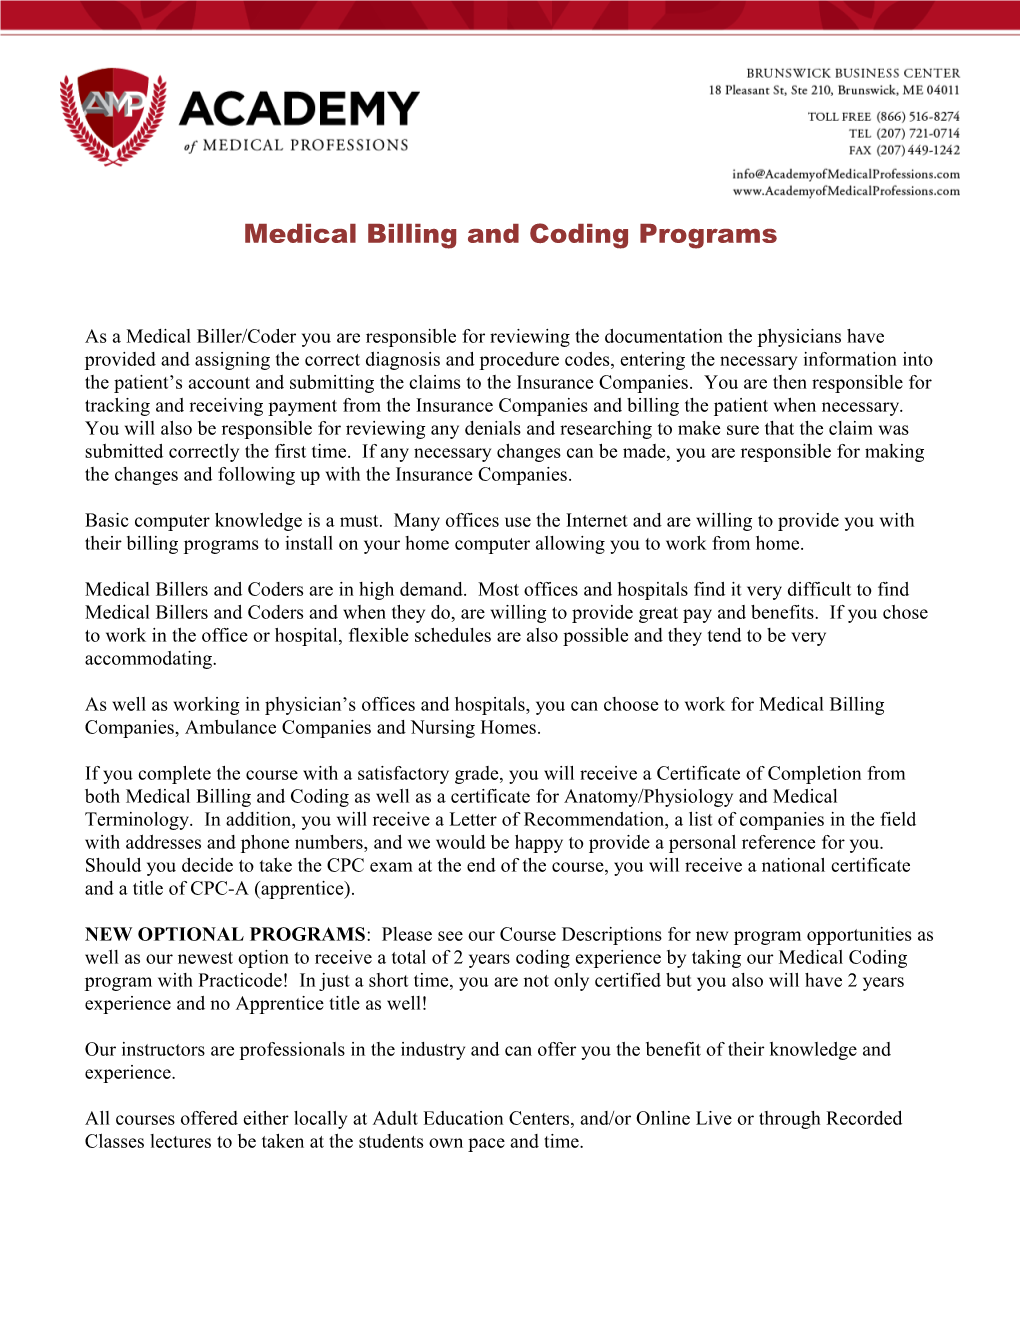 Medical Billing and Coding Programs